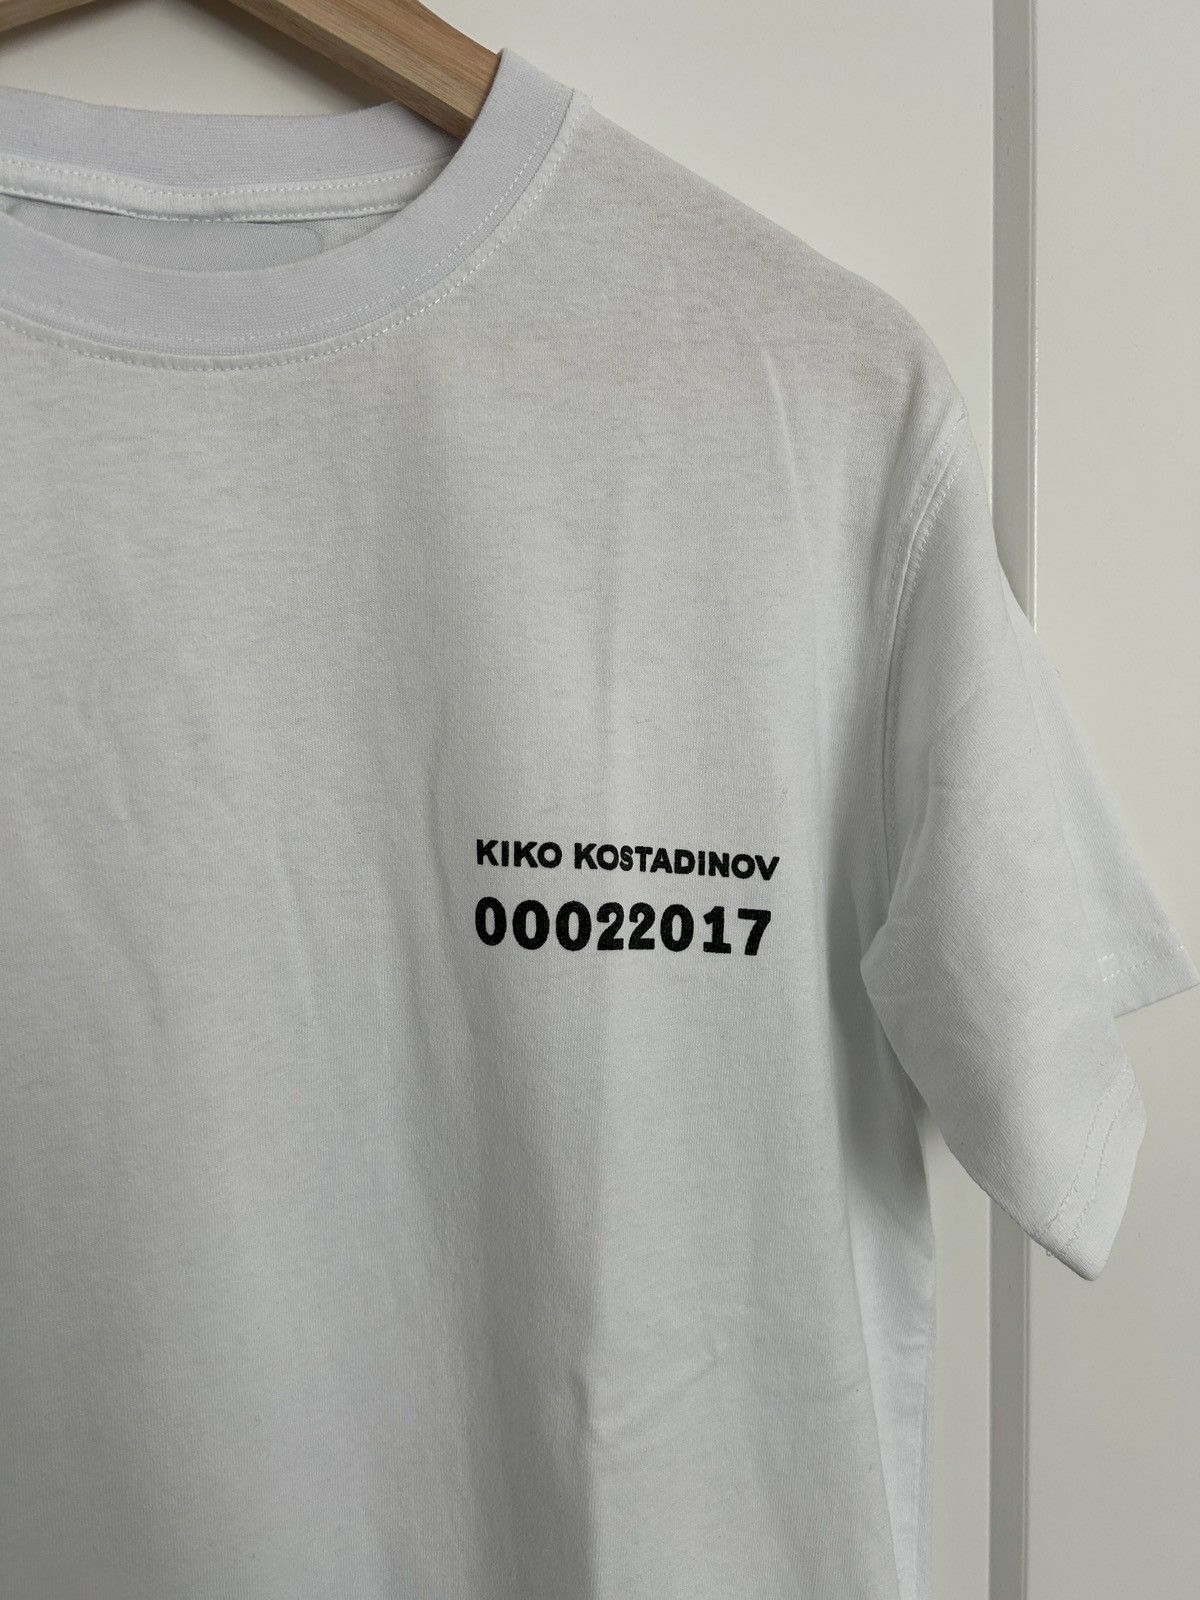 Kiko Kostadinov Kiko Kostadinov 00022017 “2 deaths 3 births” T-Shirt |  Grailed